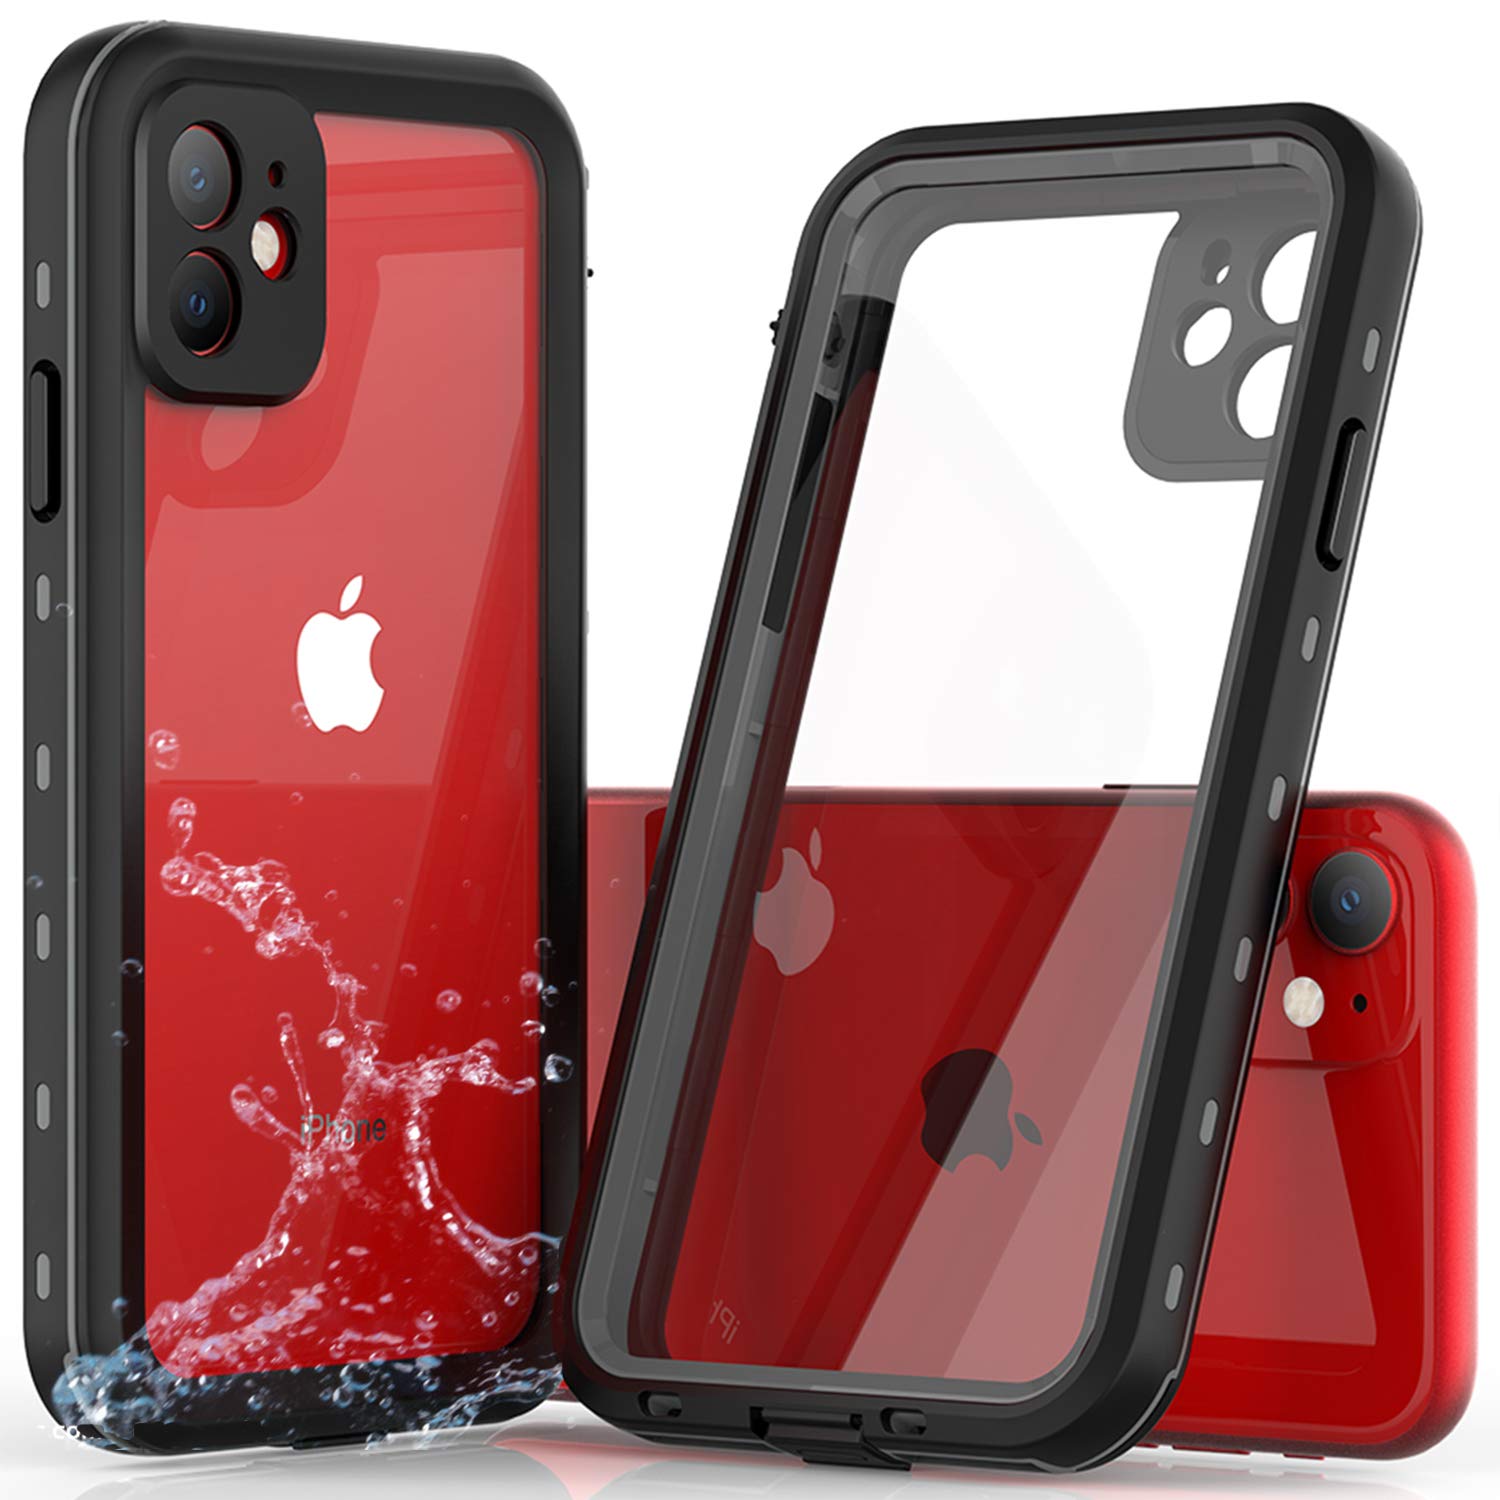 iPhone 11 Redpepper Shockproof Snowproof Dirtproof Cover Case